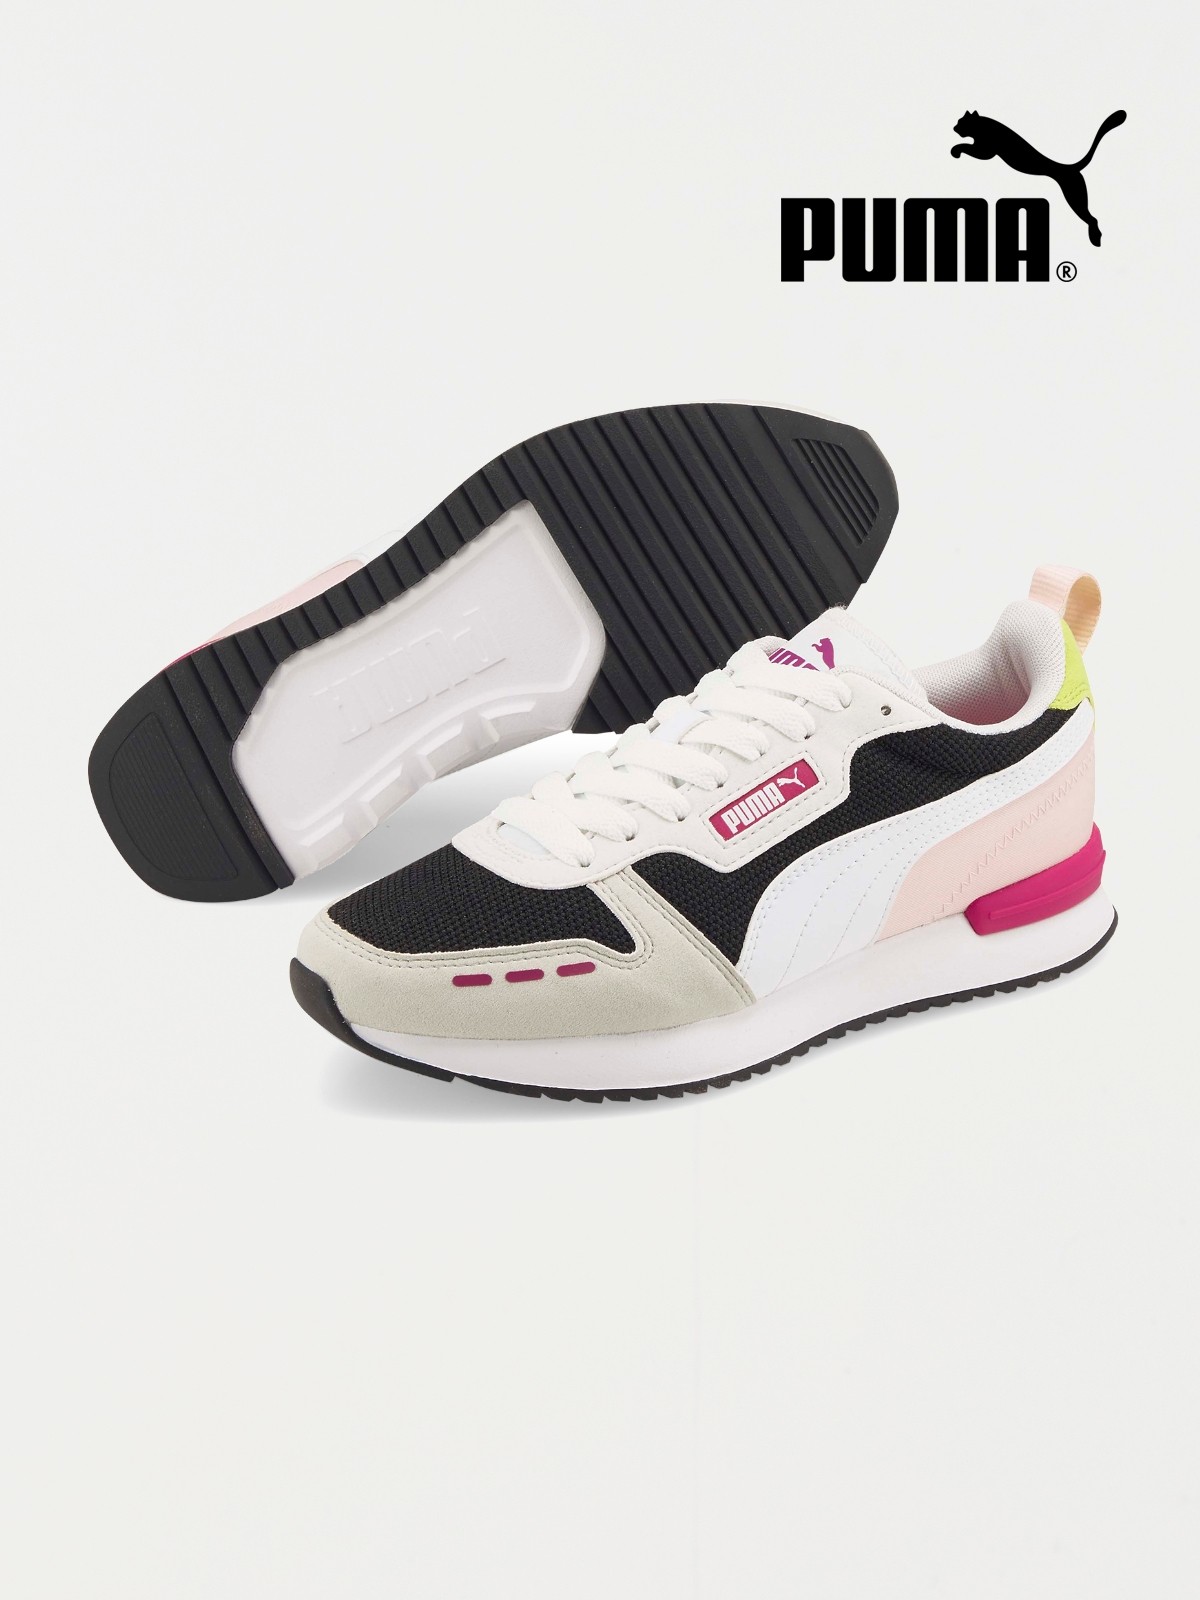 Chaussures Puma Femme